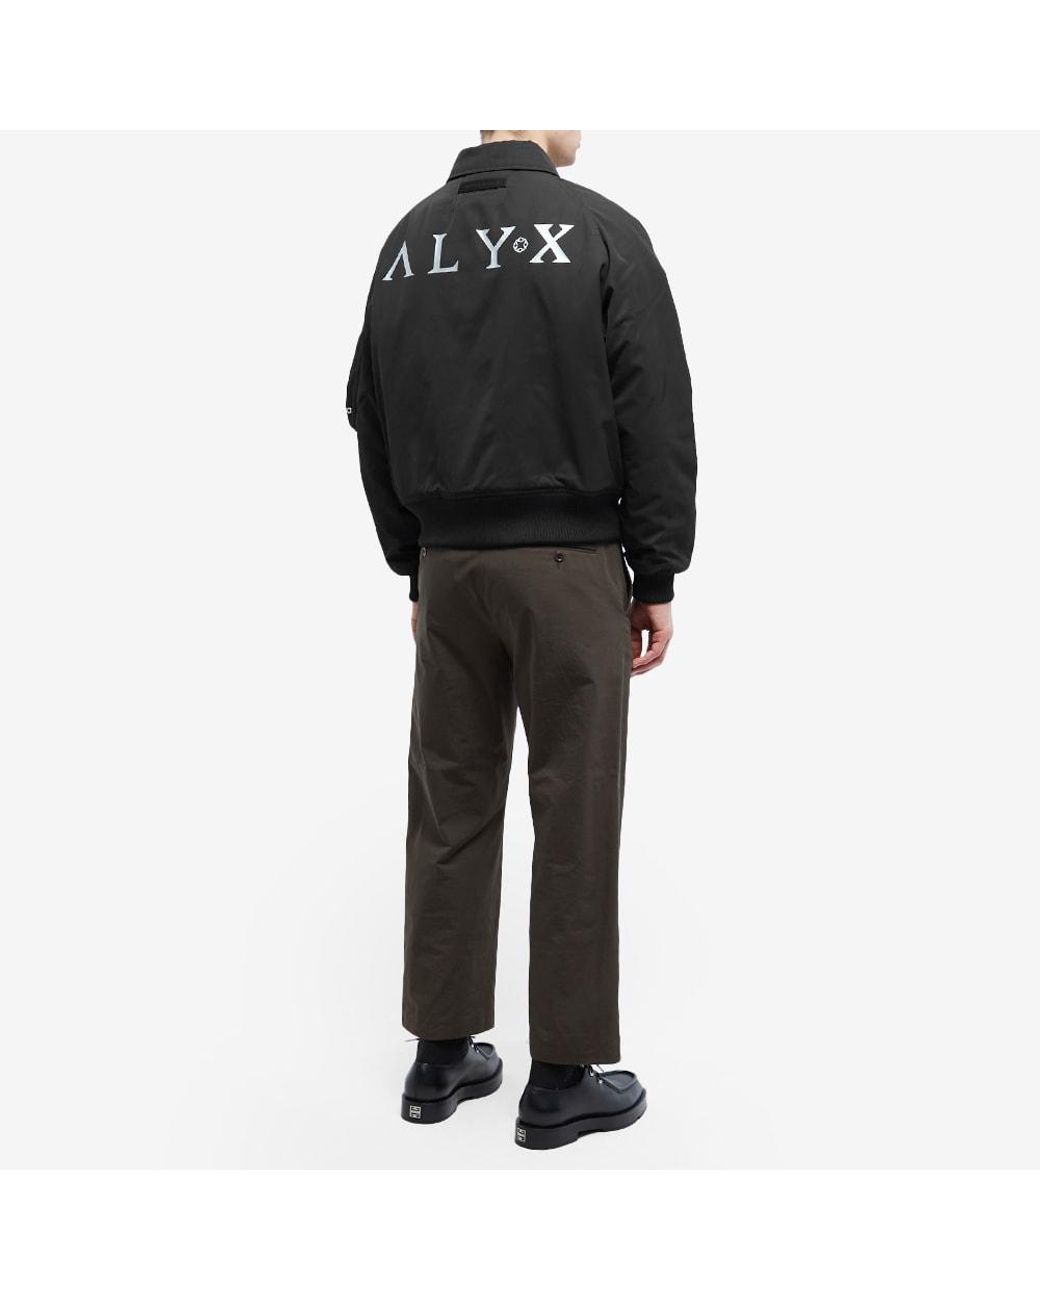 1017 ALYX 9SM Maxi Logo Bomber Jacket in Black for Men